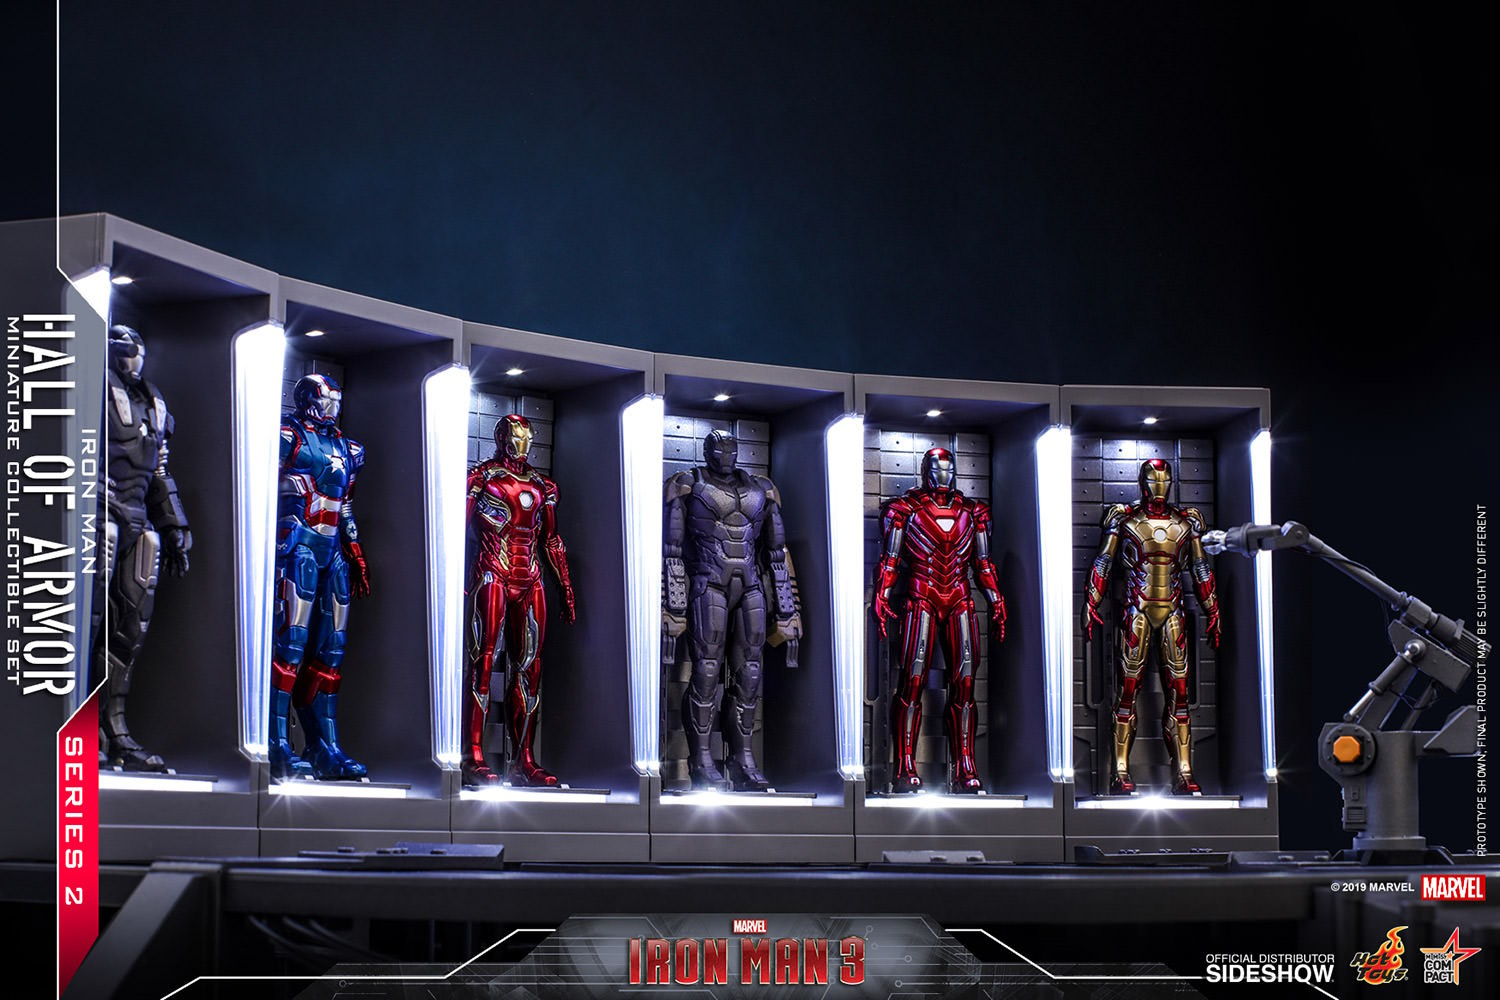 Iron Man Hall of Armor Miniature (Series 2) (Prototype Shown) View 2